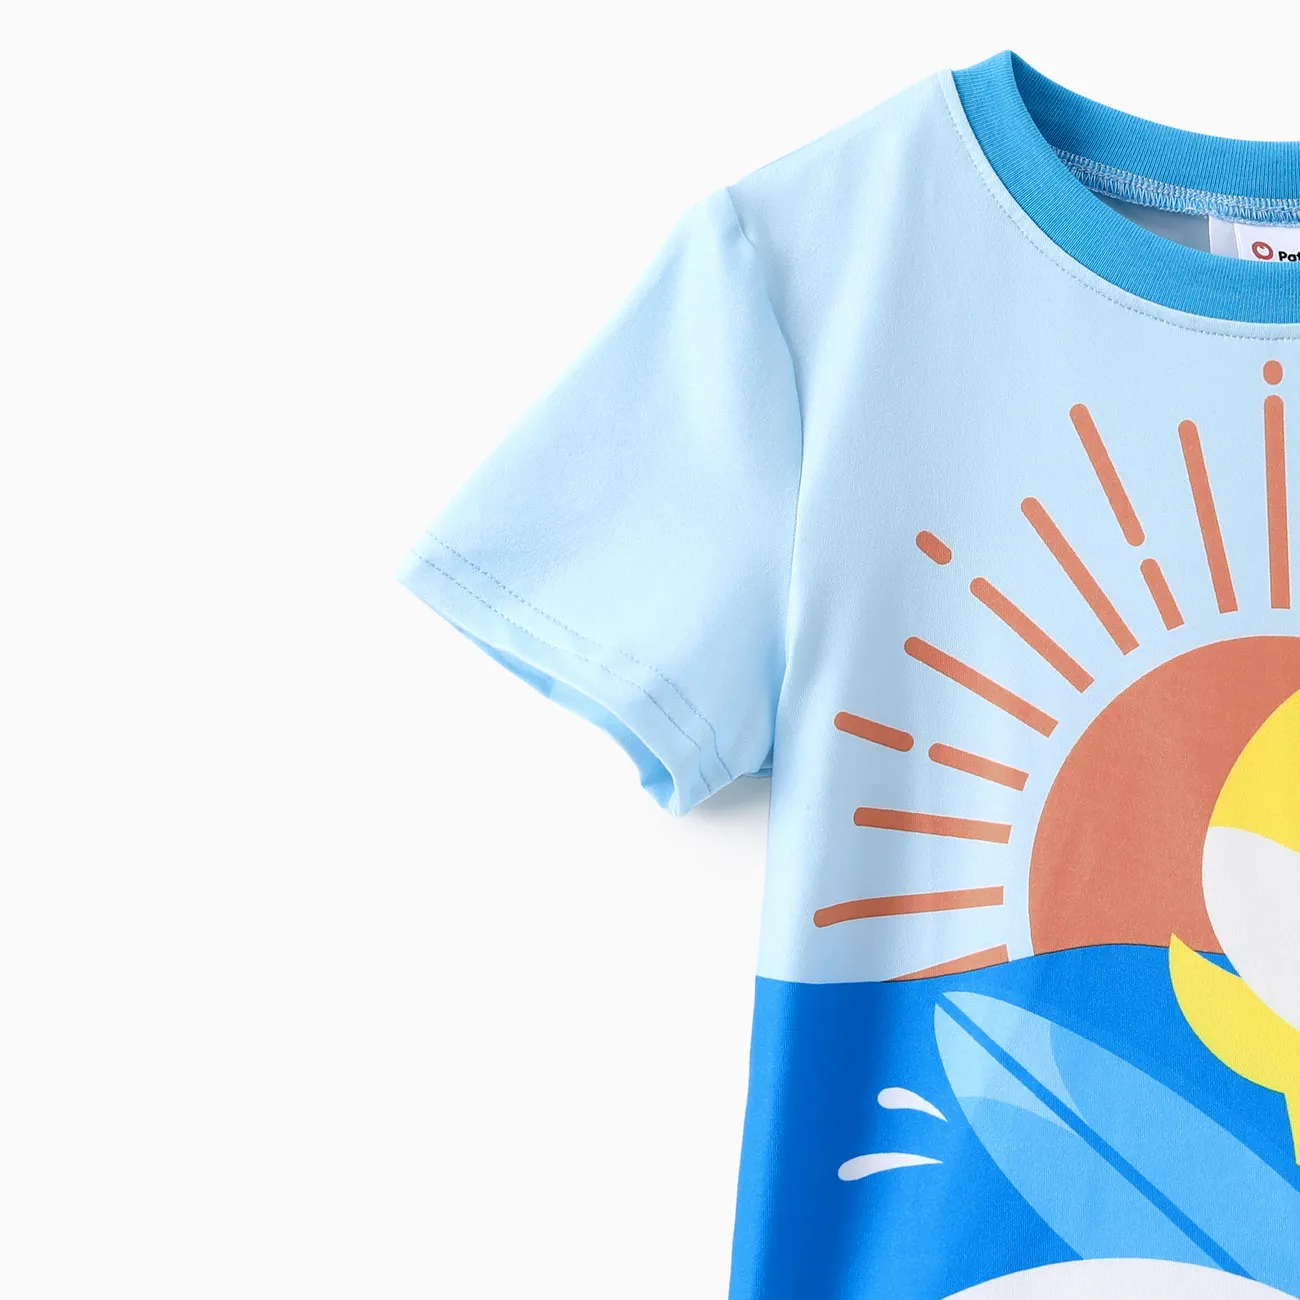 Baby Shark Toddler Boys 2pcs Sunshine Surfing Shark Print Tee with Shorts Set Blue big image 1